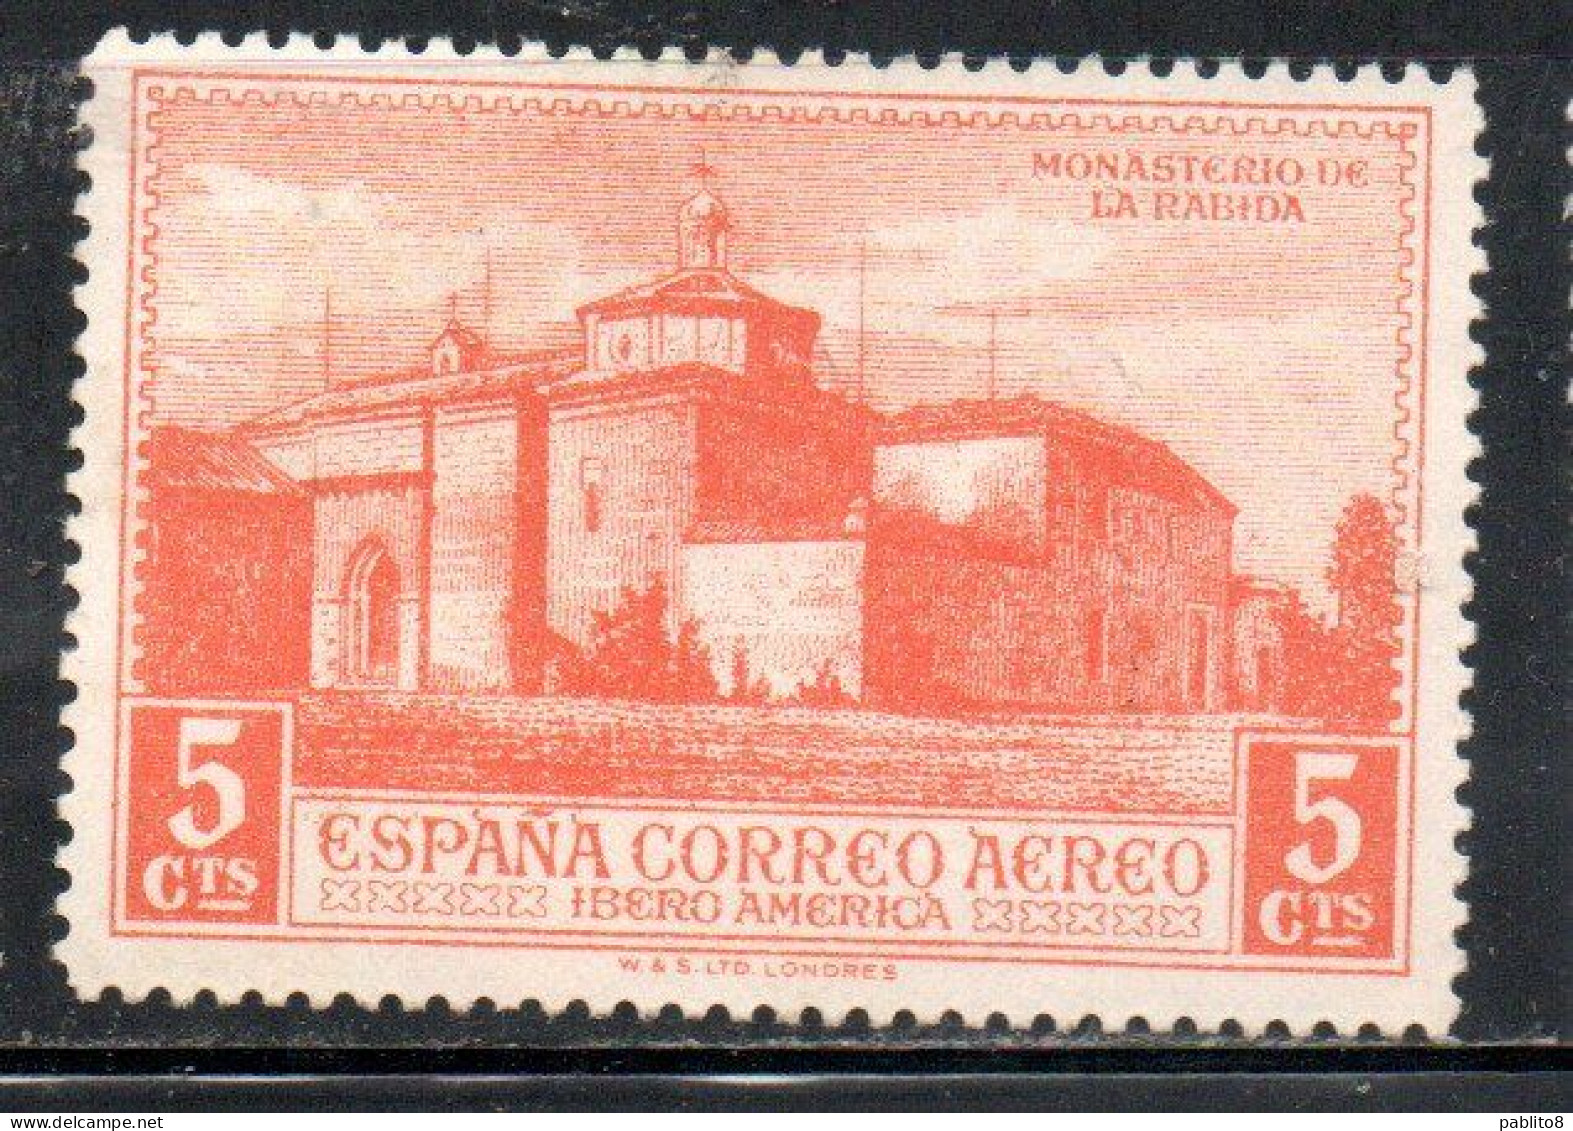 SPAIN ESPAÑA SPAGNA 1930 AIR POST MAIL AIRMAIL CHRISTOPHER COLUMBUS ISSUE LA RABYDA MONASTER  5c MLH - Ongebruikt